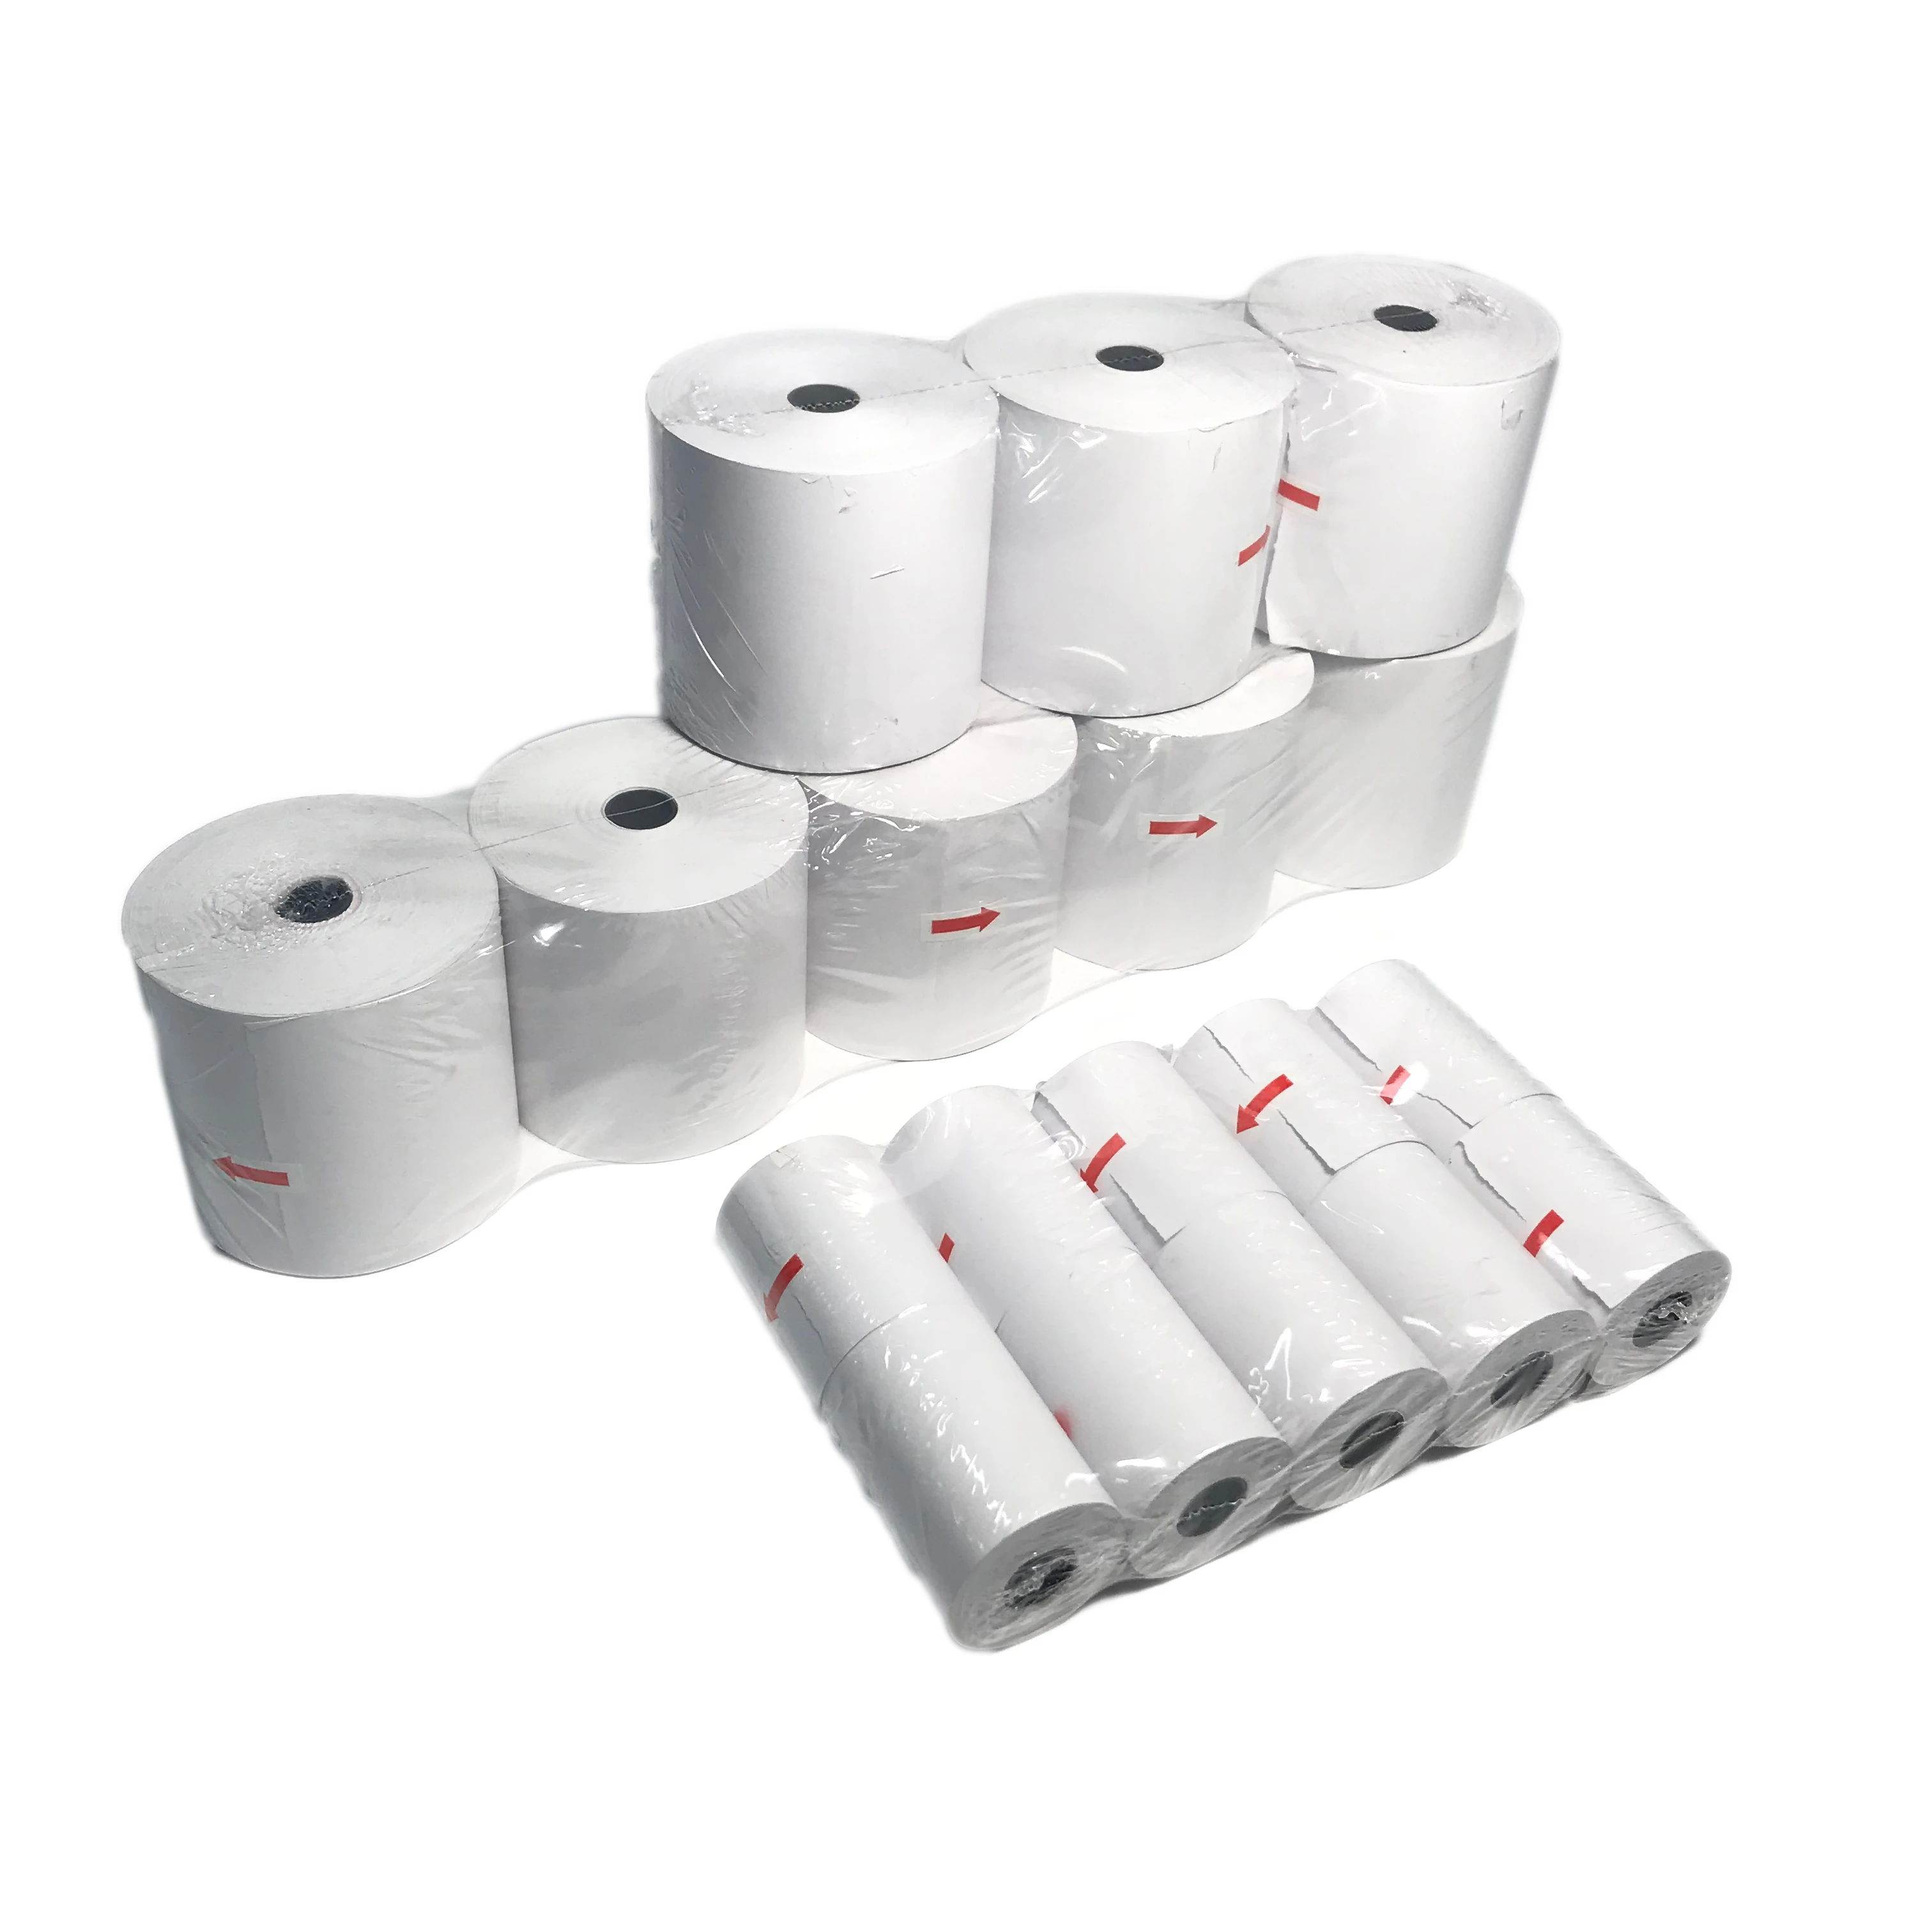 thermal printer paper rolls thermic sensitive paper rolls